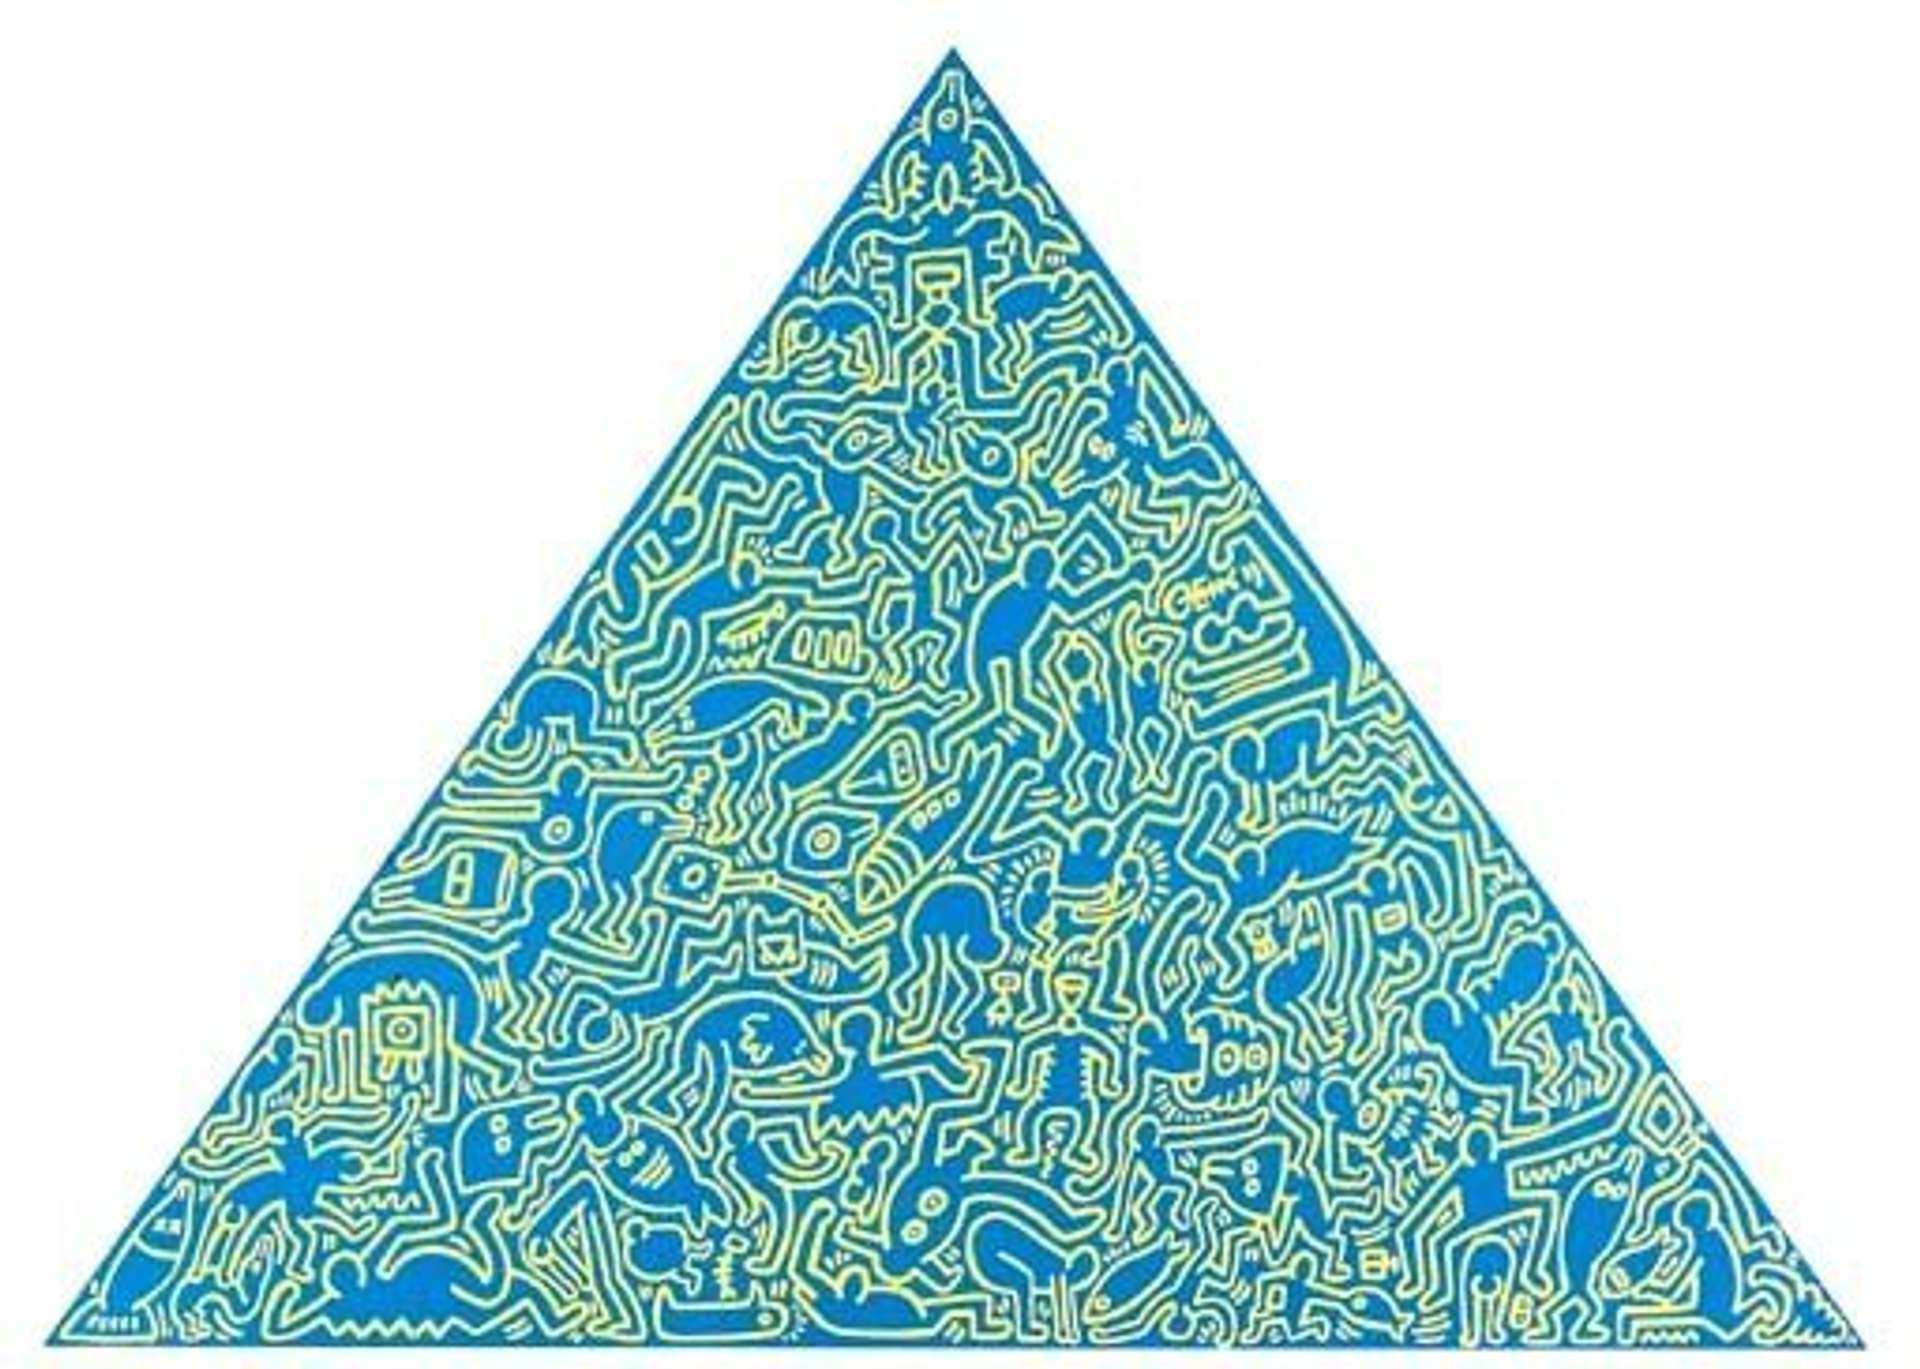 Pyramid (blue I) by Keith Haring